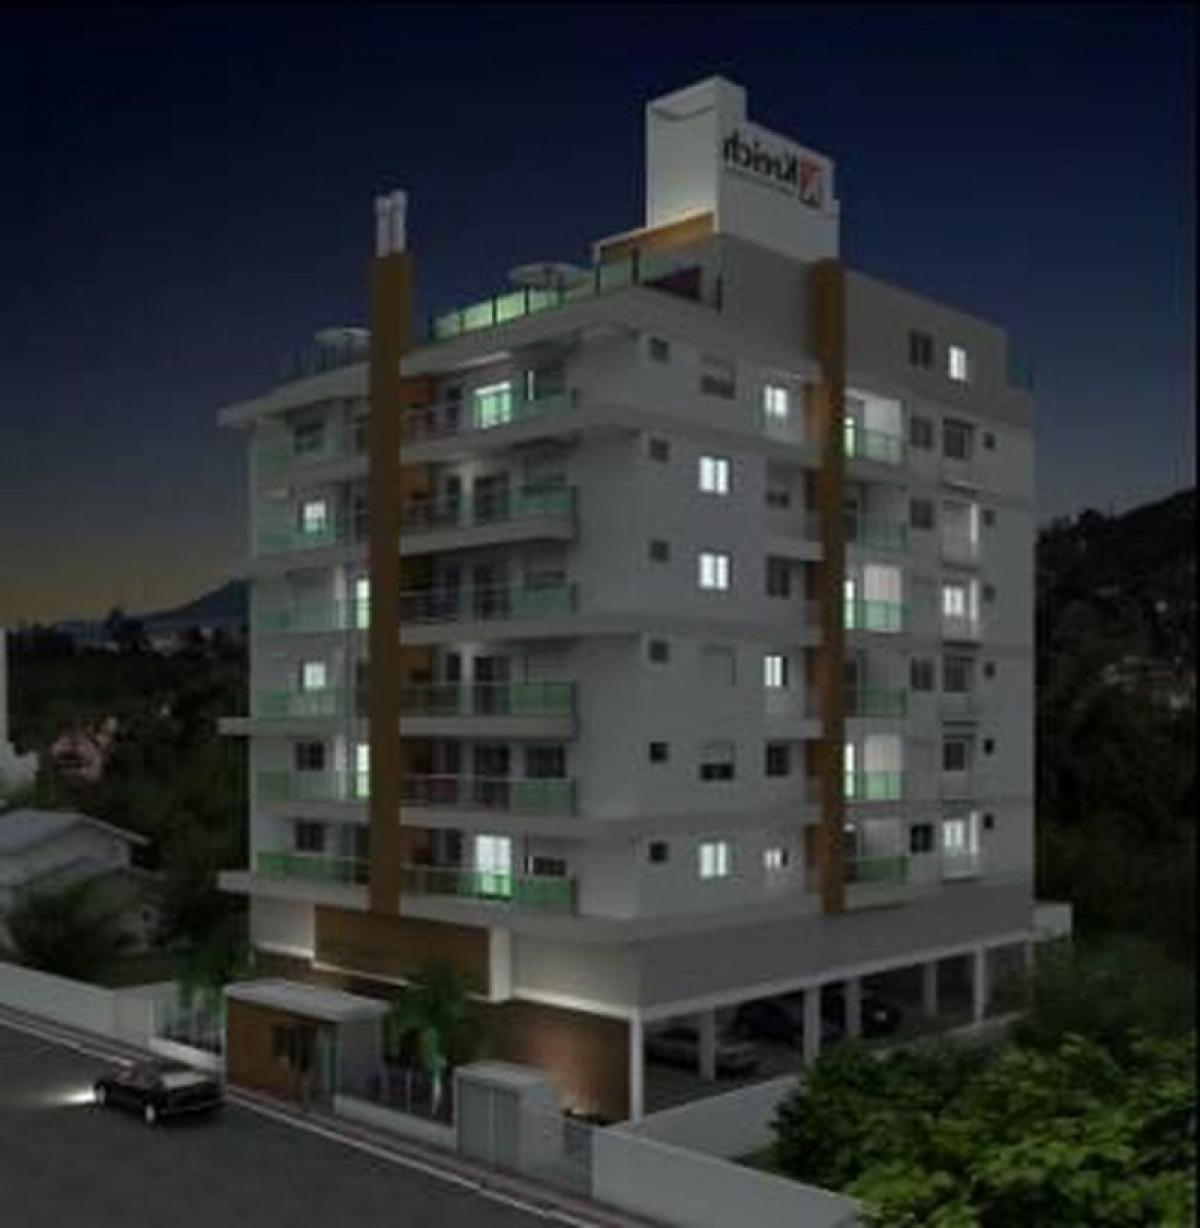 Picture of Apartment For Sale in Biguaçu, Santa Catarina, Brazil